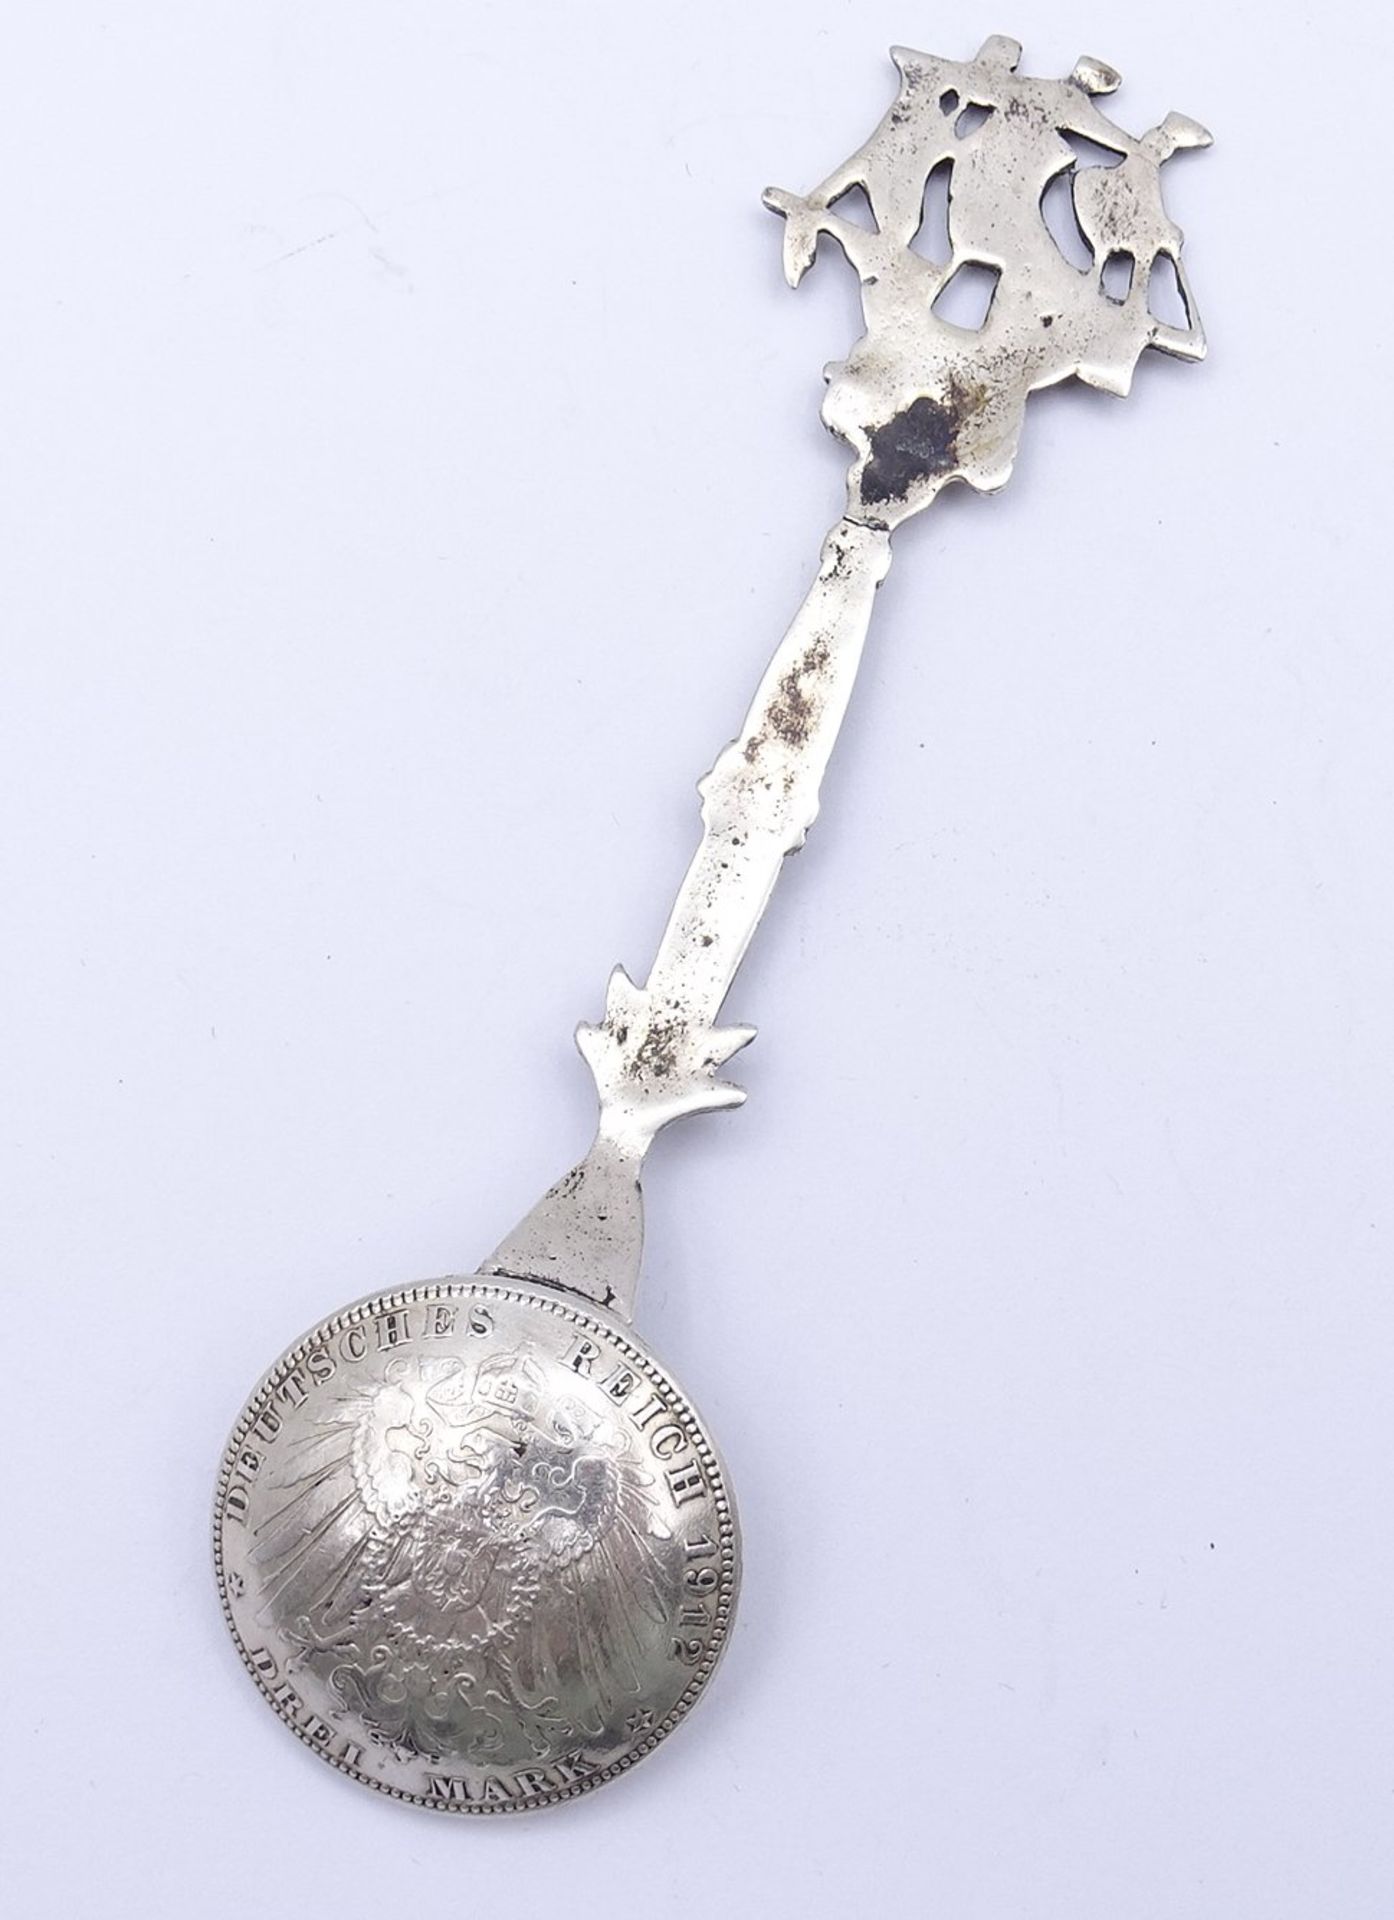 Münzlöffel mnit Koggegriff,Silber 0.800, Drei Mark 1912 Hamburg,L- 12cm, 27g. - Bild 4 aus 4